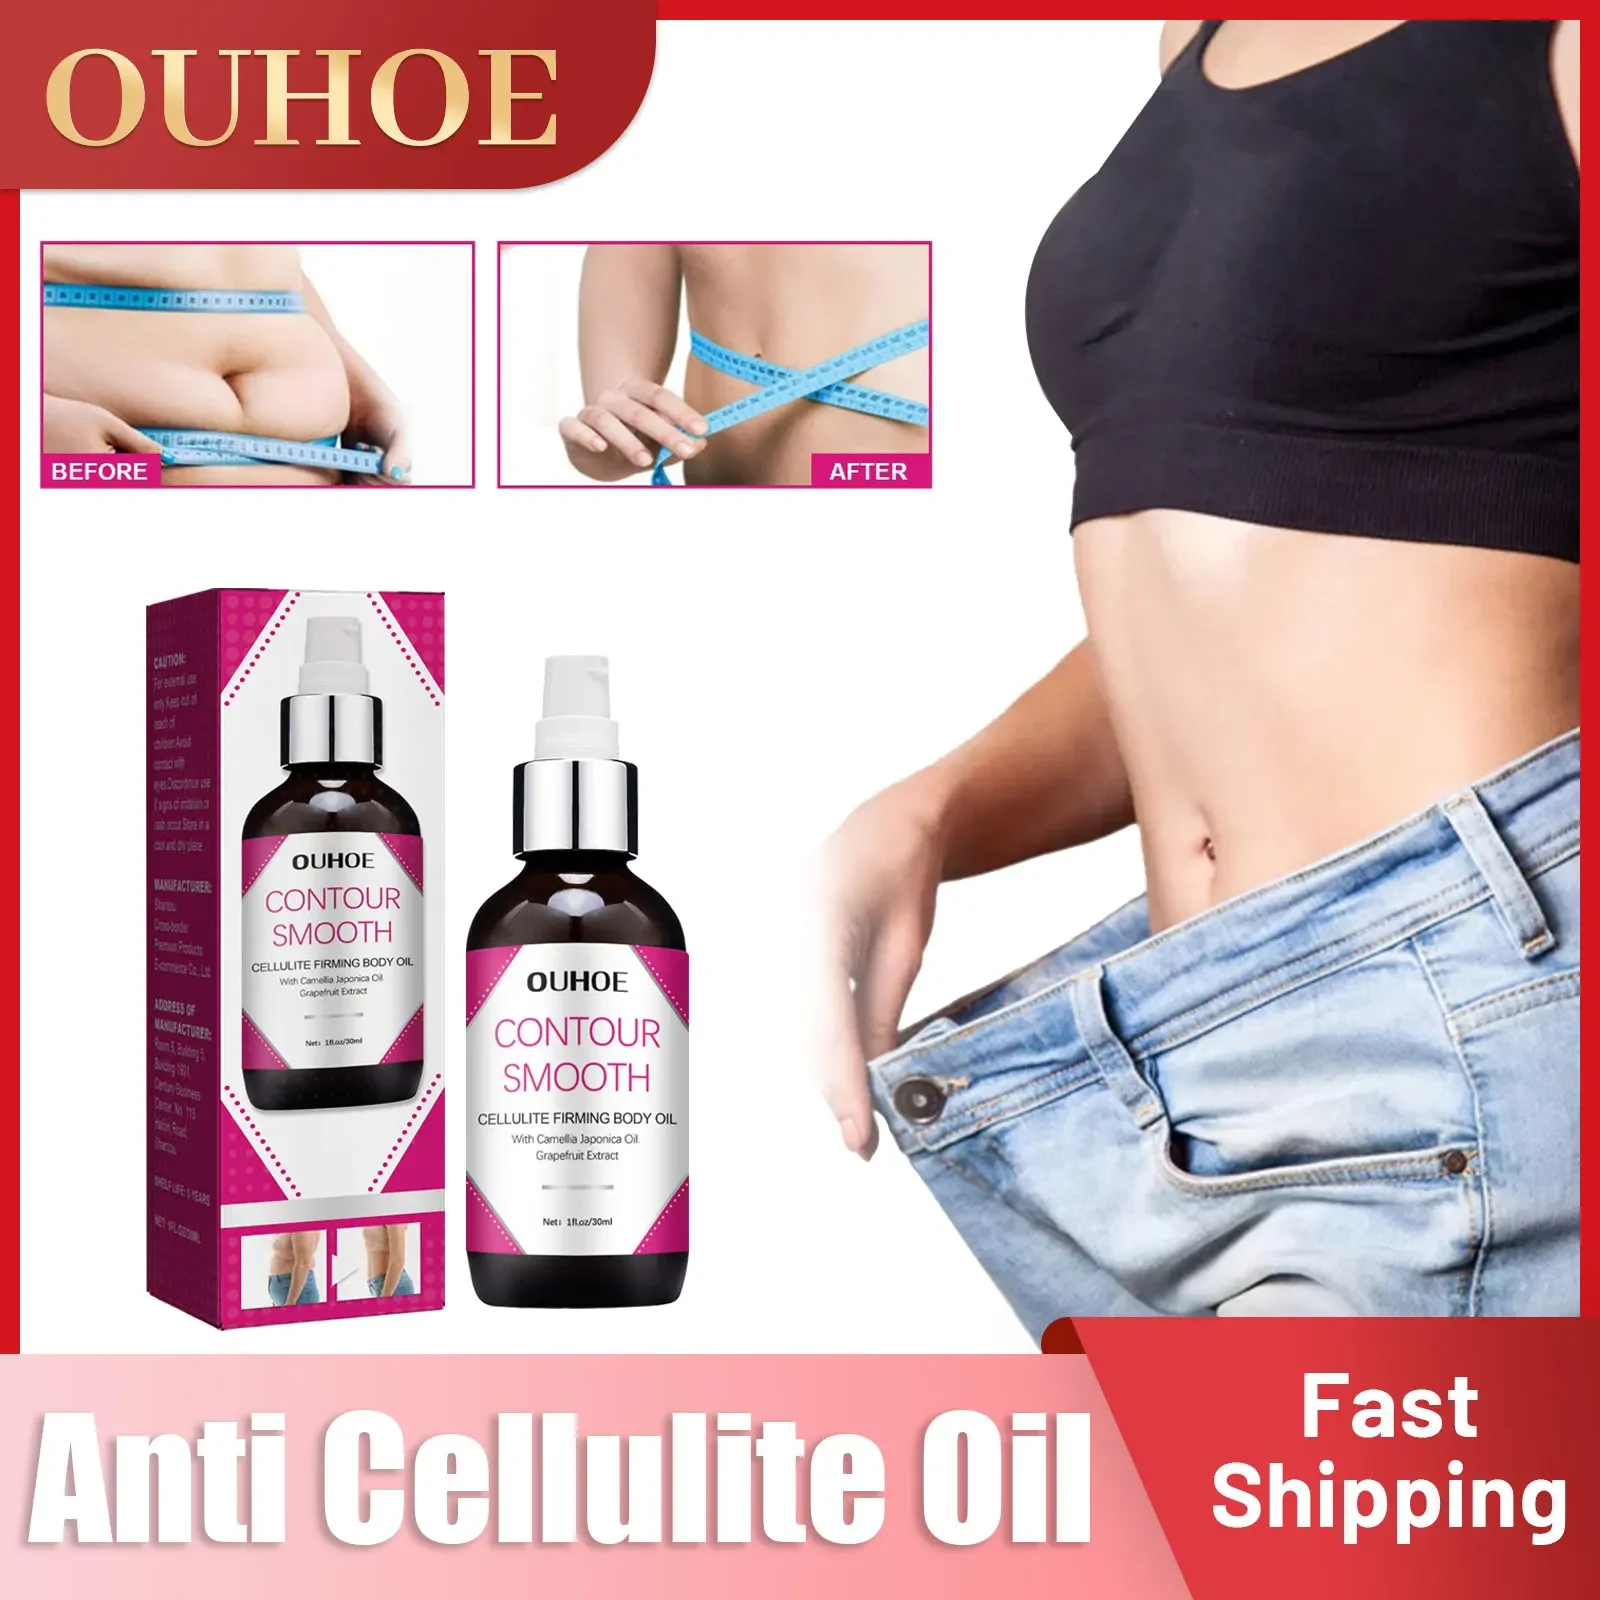 

Anti Cellulite Oil Fat Burning Slimming Tightening Thin Leg Waist Arm Buttocks Abdomen Firming Shaping Sculpting Weight Loss Oil